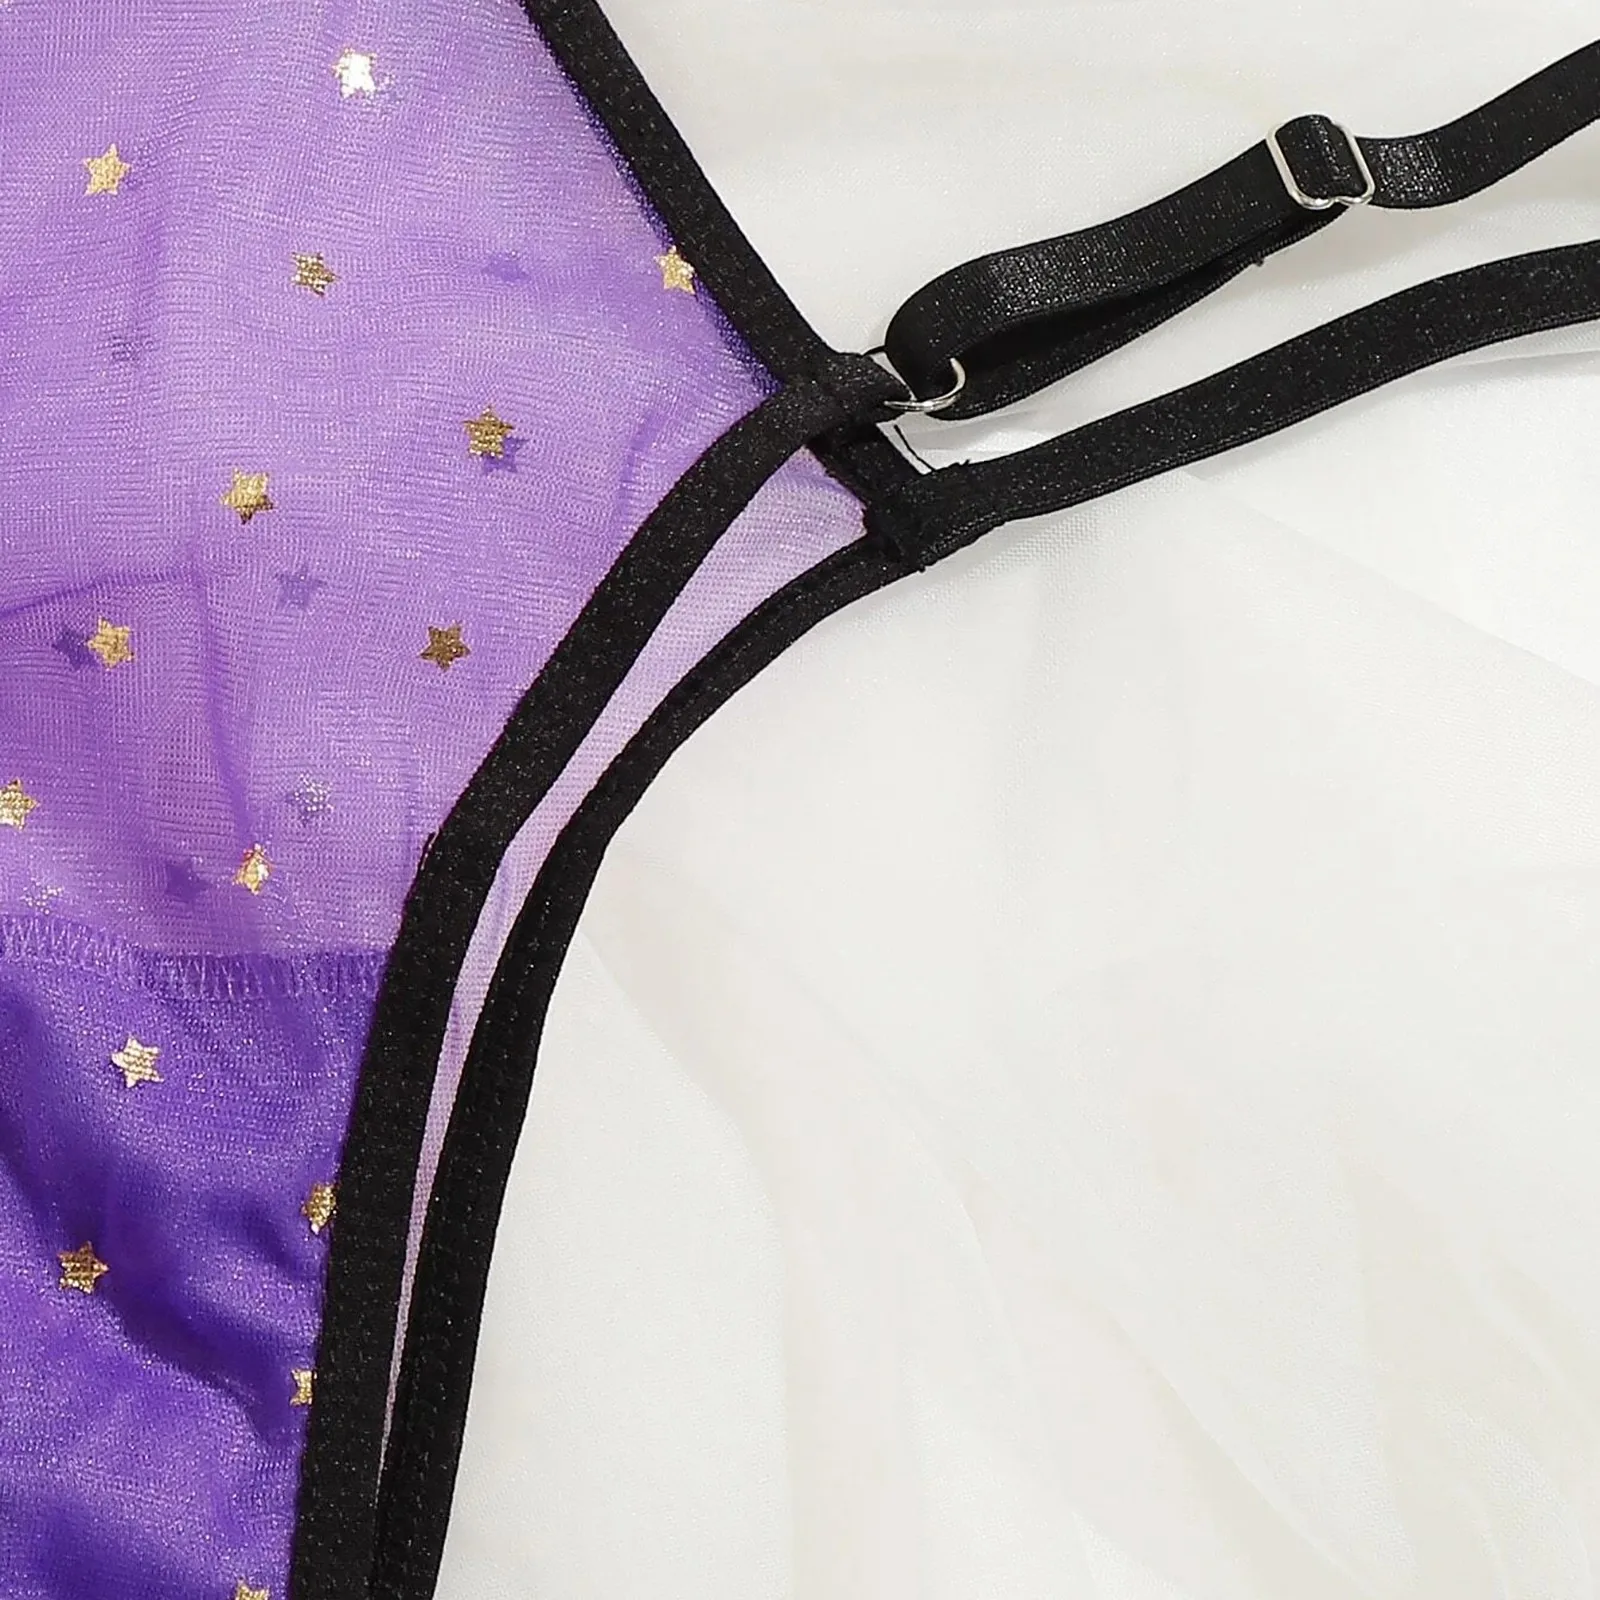 

Women Sexy Lingerie See Through Lace Underwear Set Hot Erotic Printed Embroidery Sleepwear Porno Temptation Intimate Babydolls